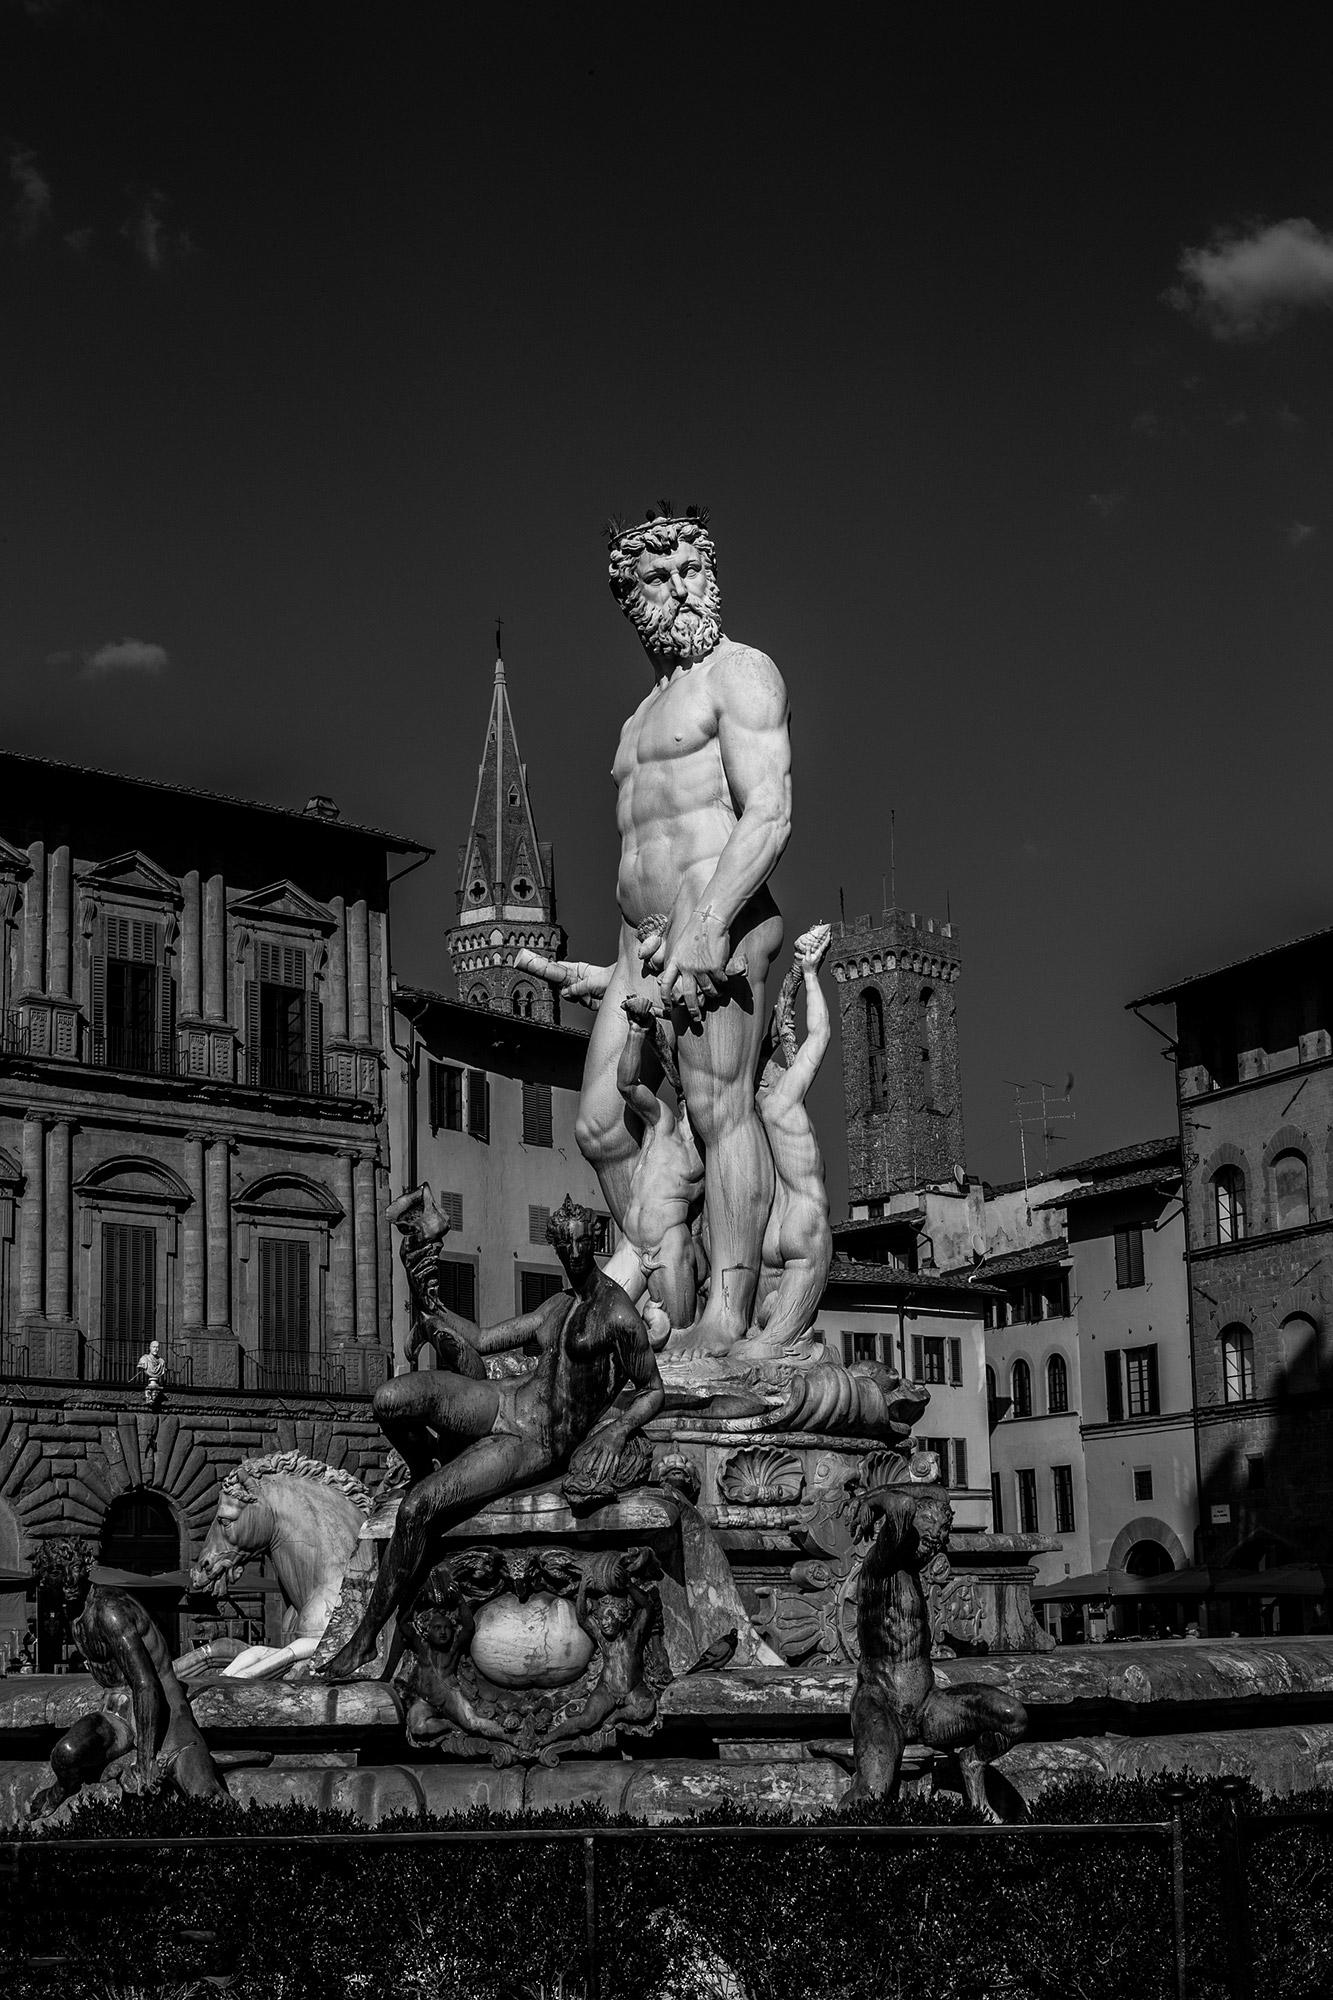 Juan Pablo Castro Landscape Photograph - Firenze. Figurative Landscape black and white limited edition photograph